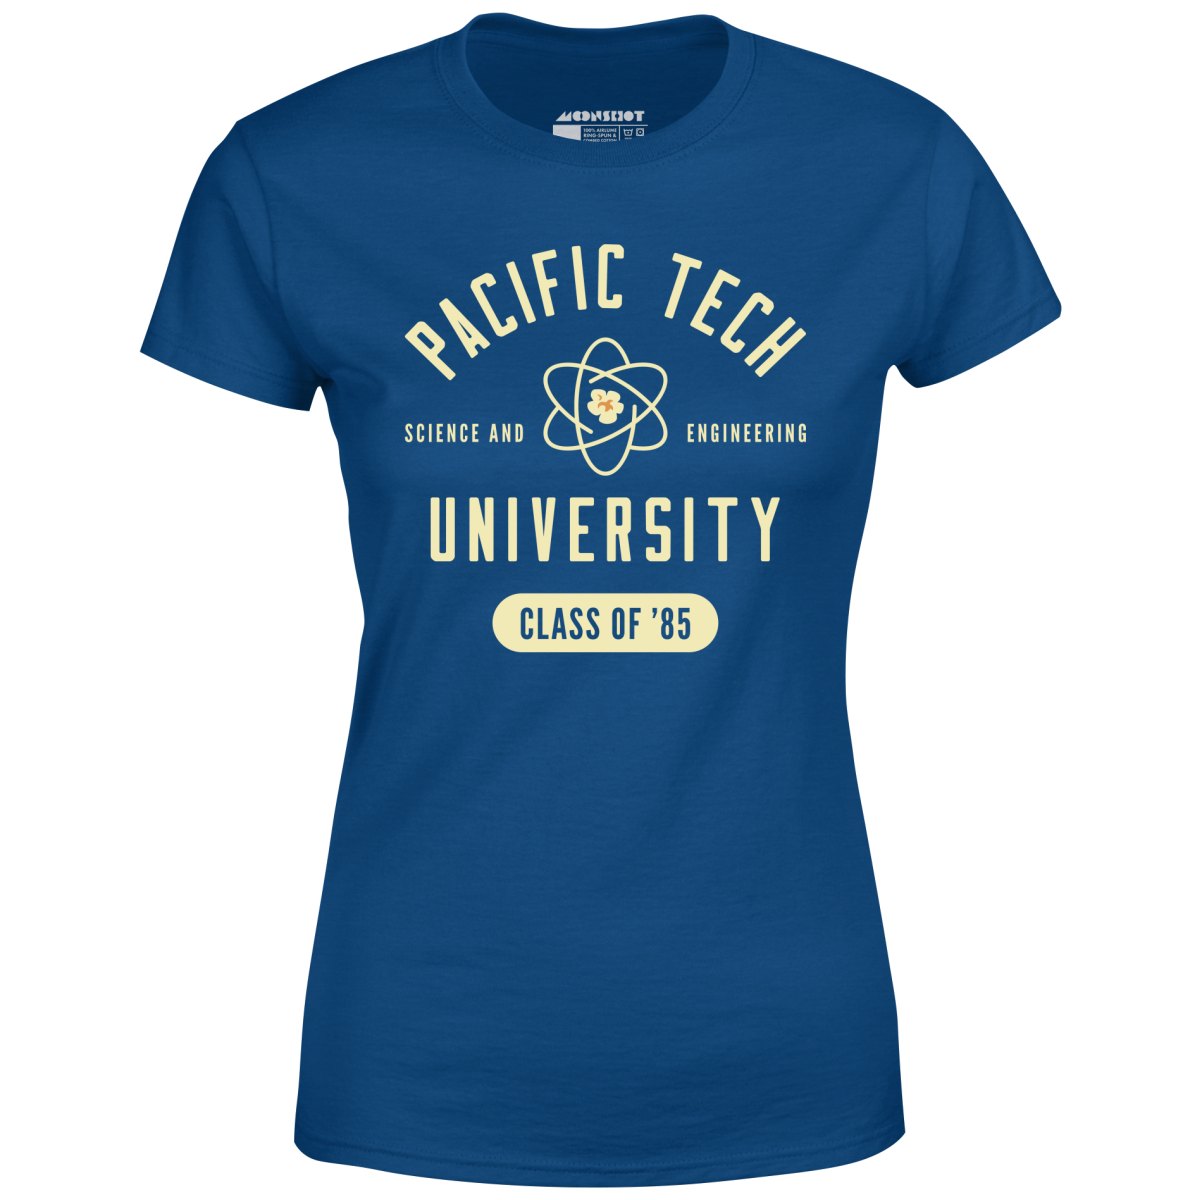 Real Genius - Pacific Tech University - Women's T-Shirt